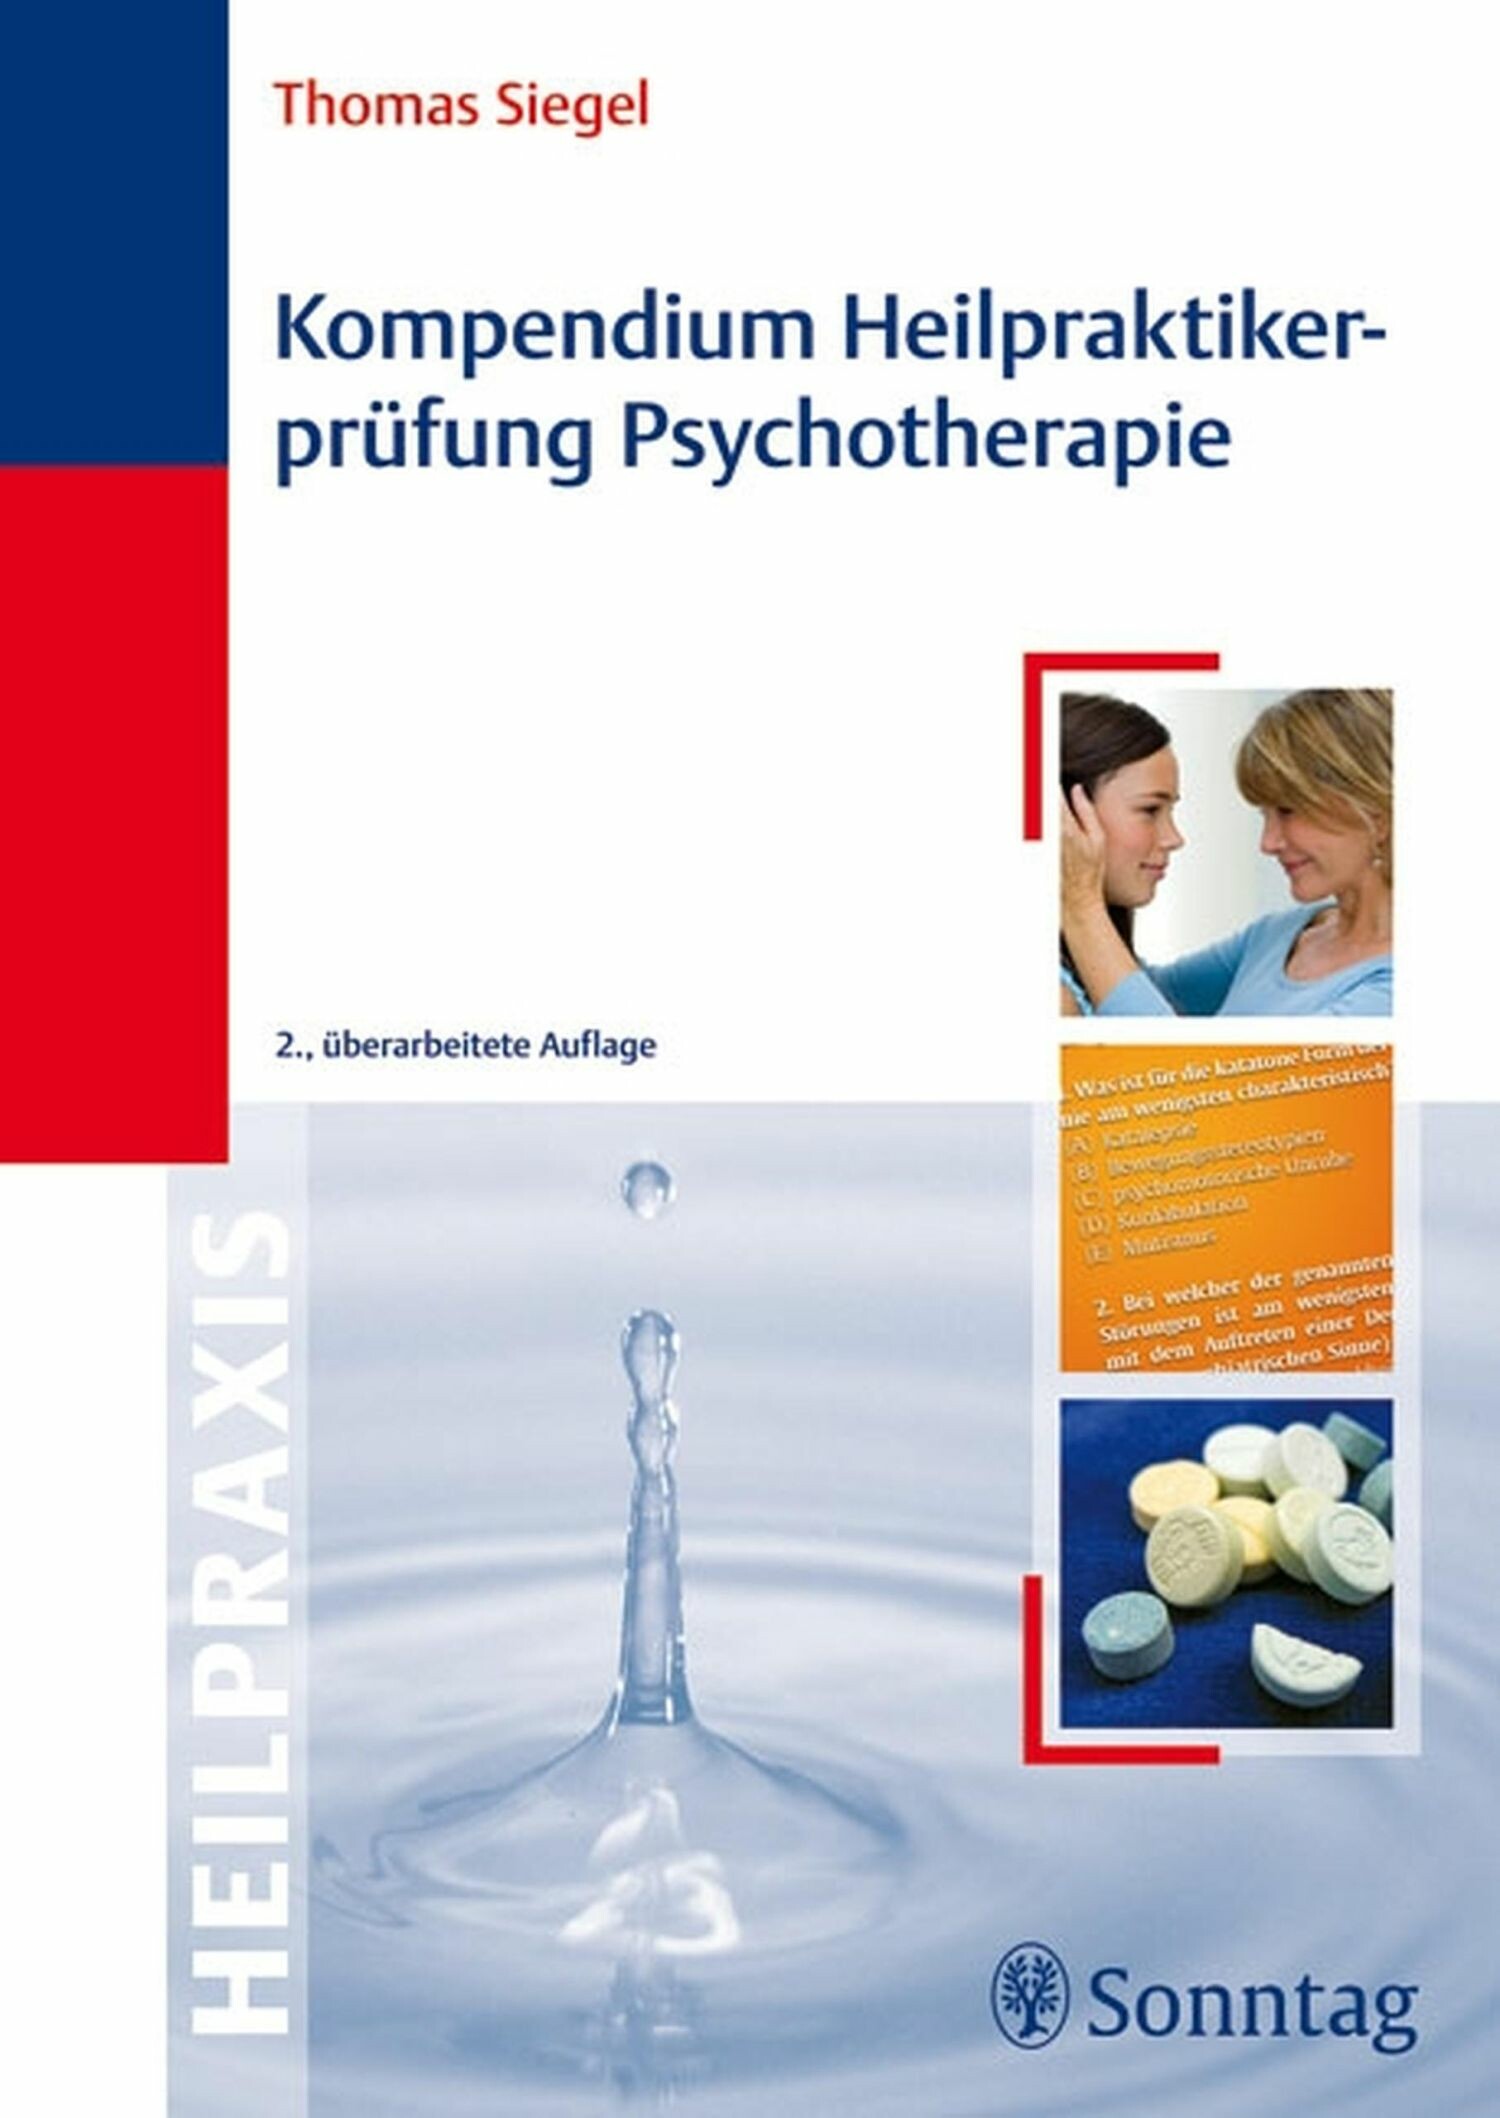 Kompendium Heilpraktikerprüfung Psychotherapie